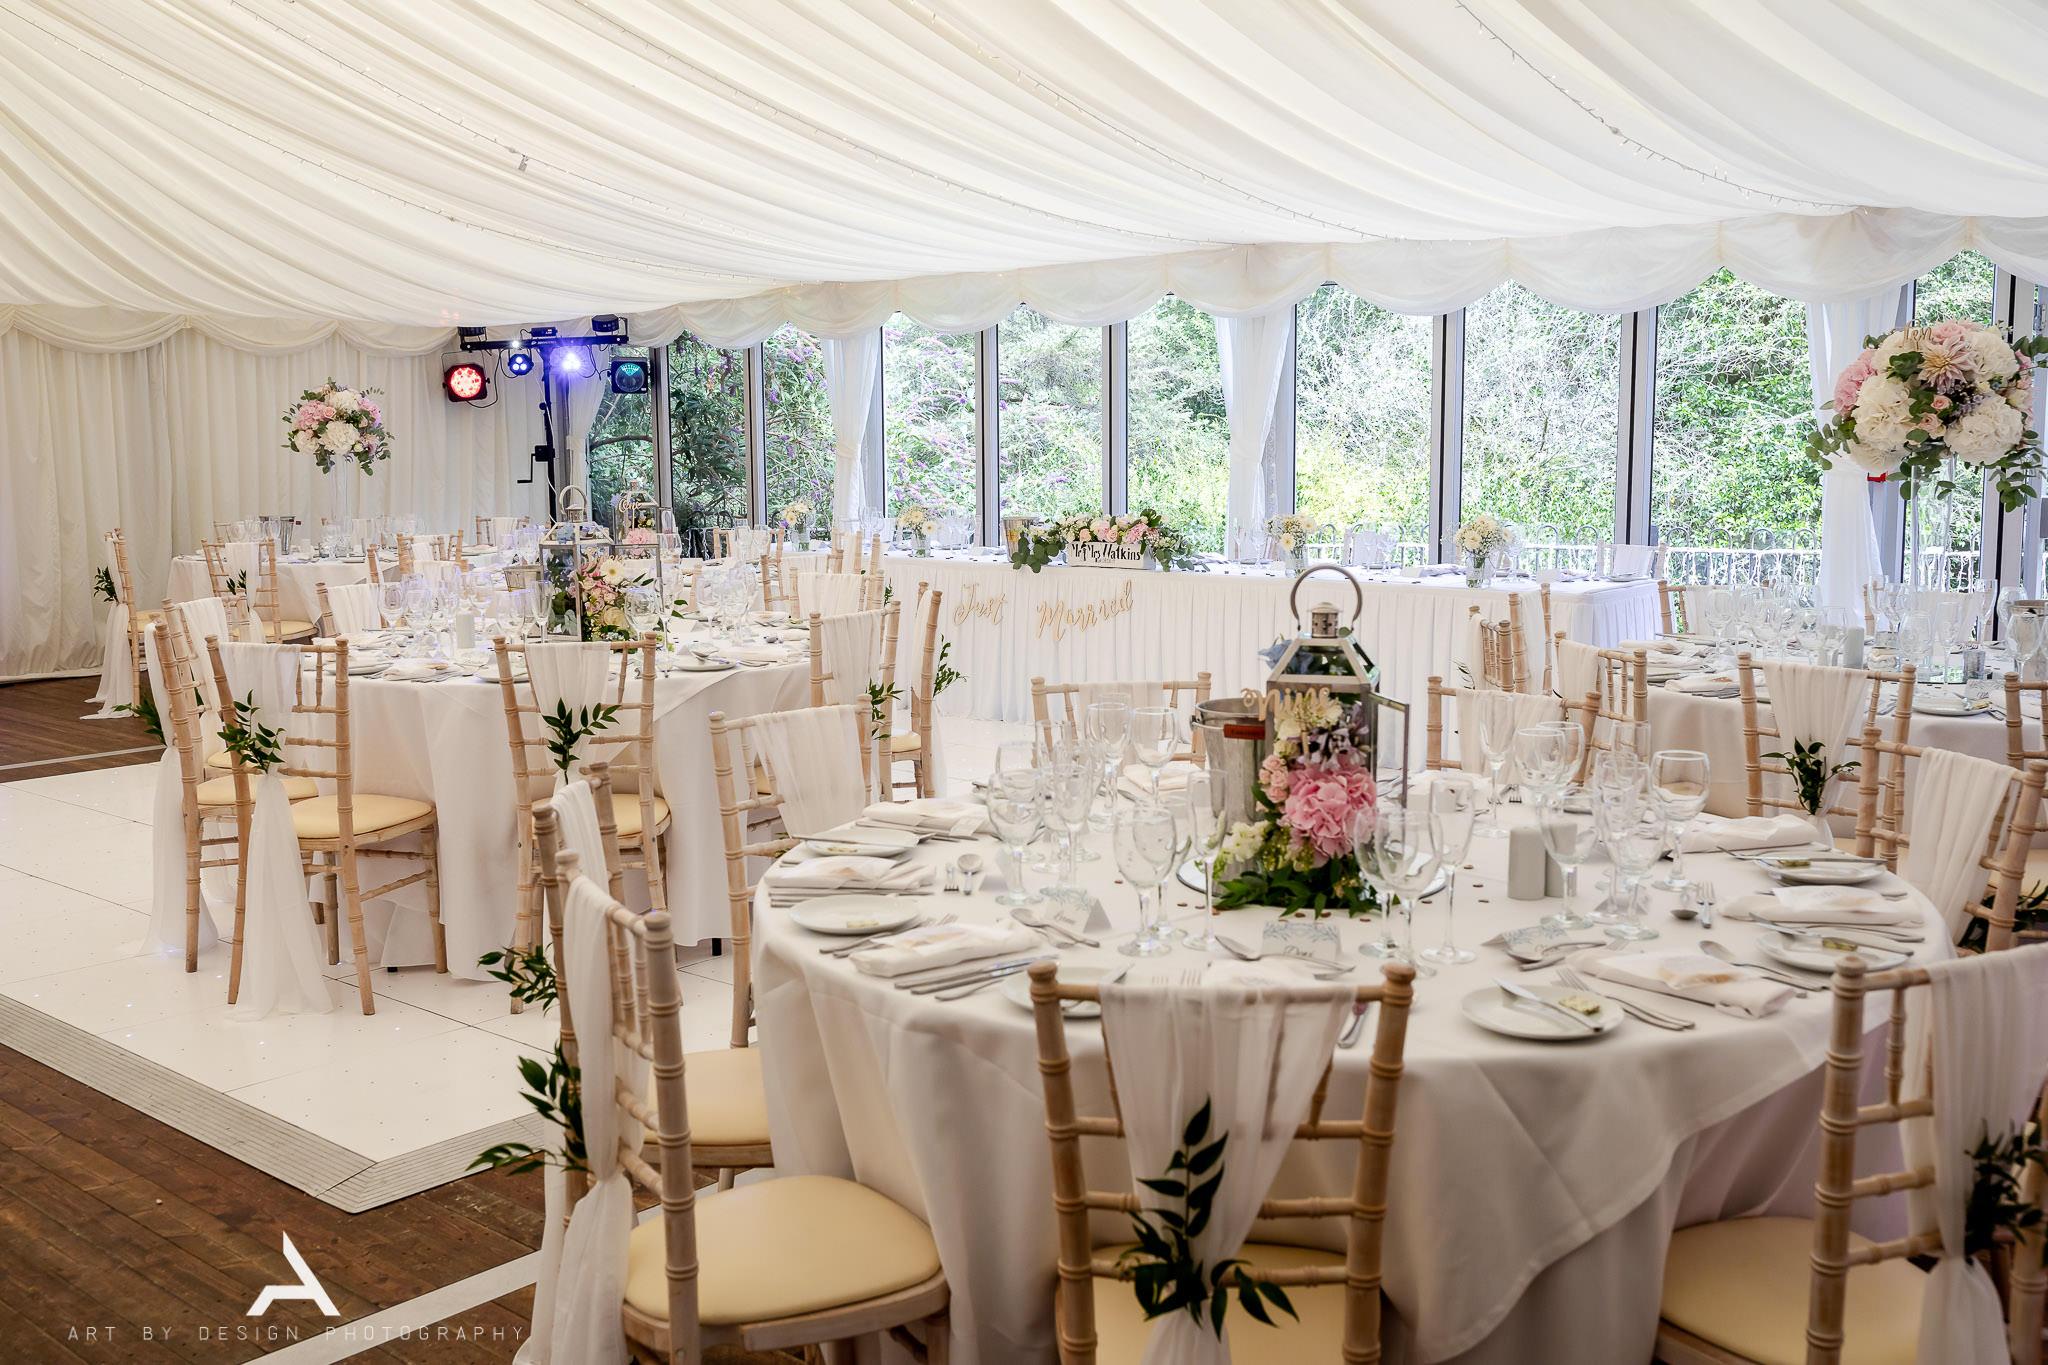 Bryngarw House wedding - Reception - Art by Design Photography